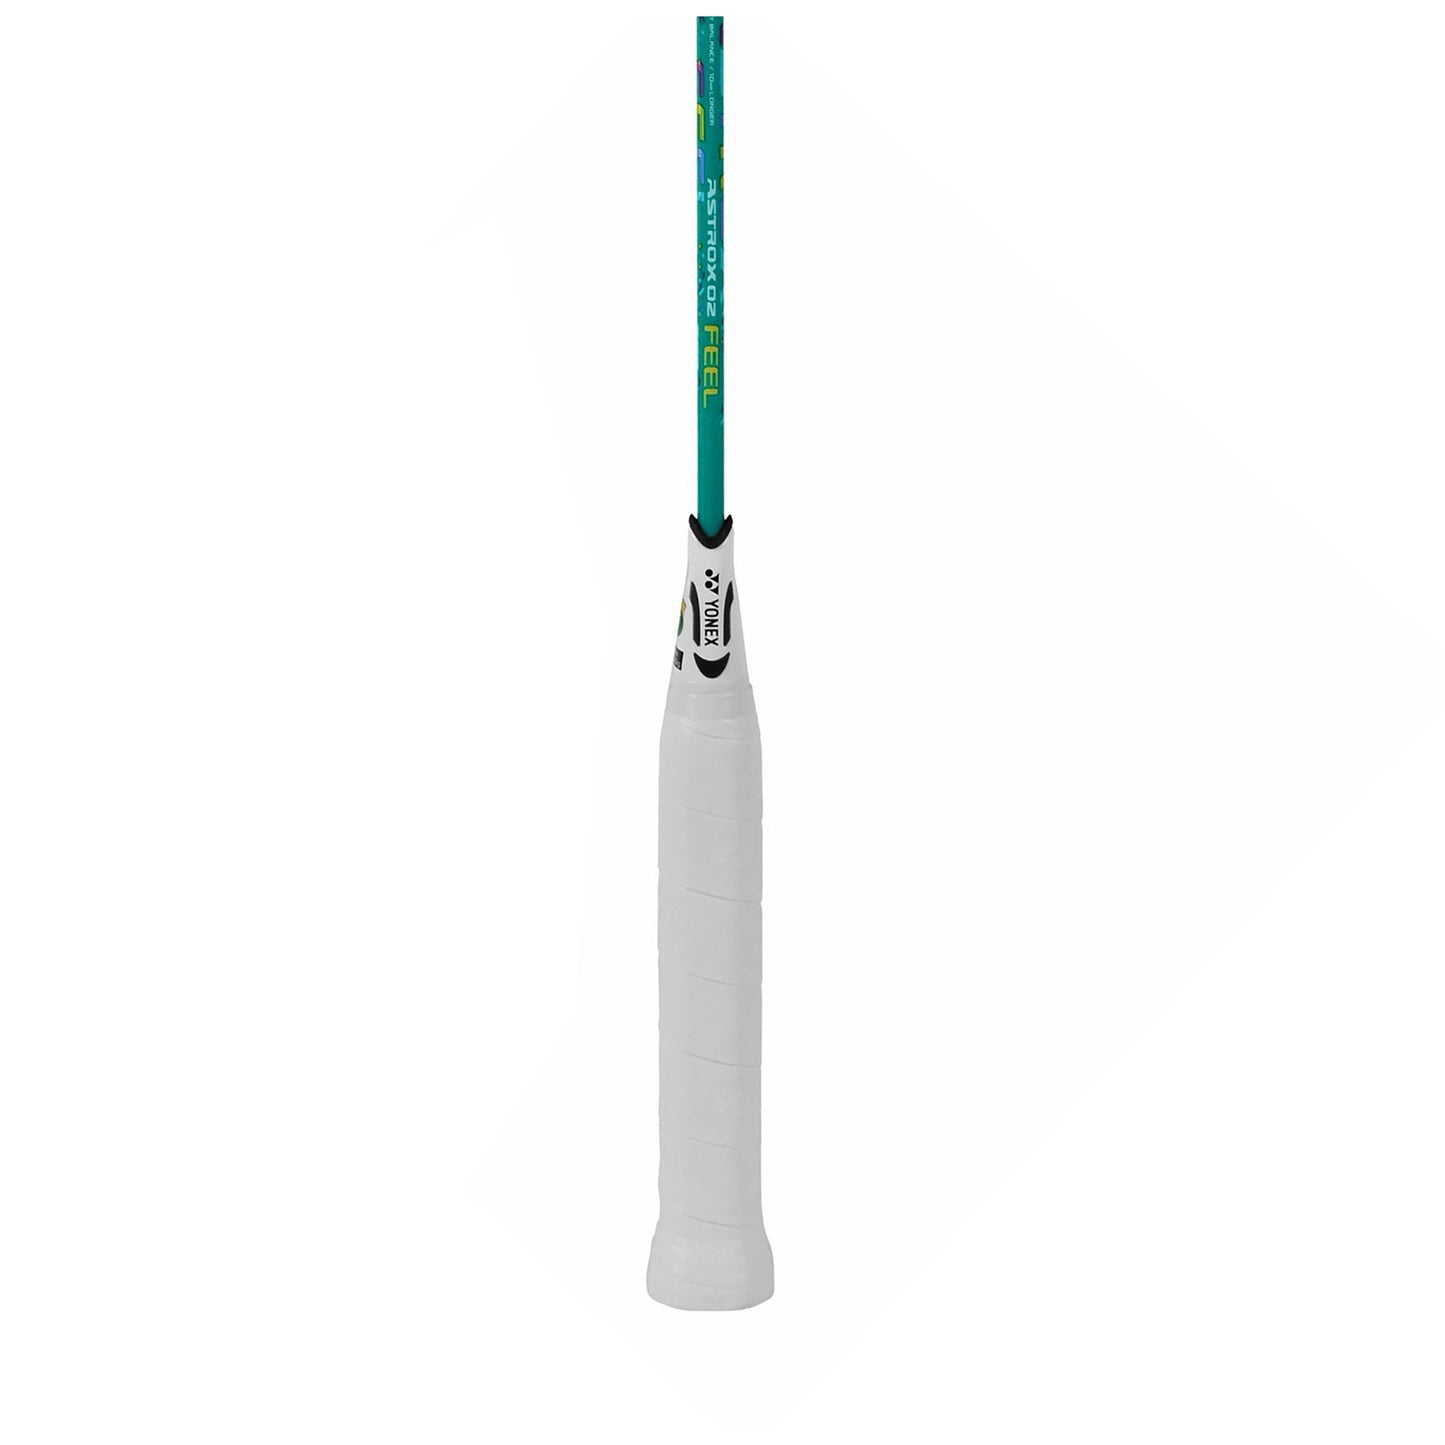 Yonex Astrox 02 Feel Strung Badminton Racquet, Turquoise - Best Price online Prokicksports.com